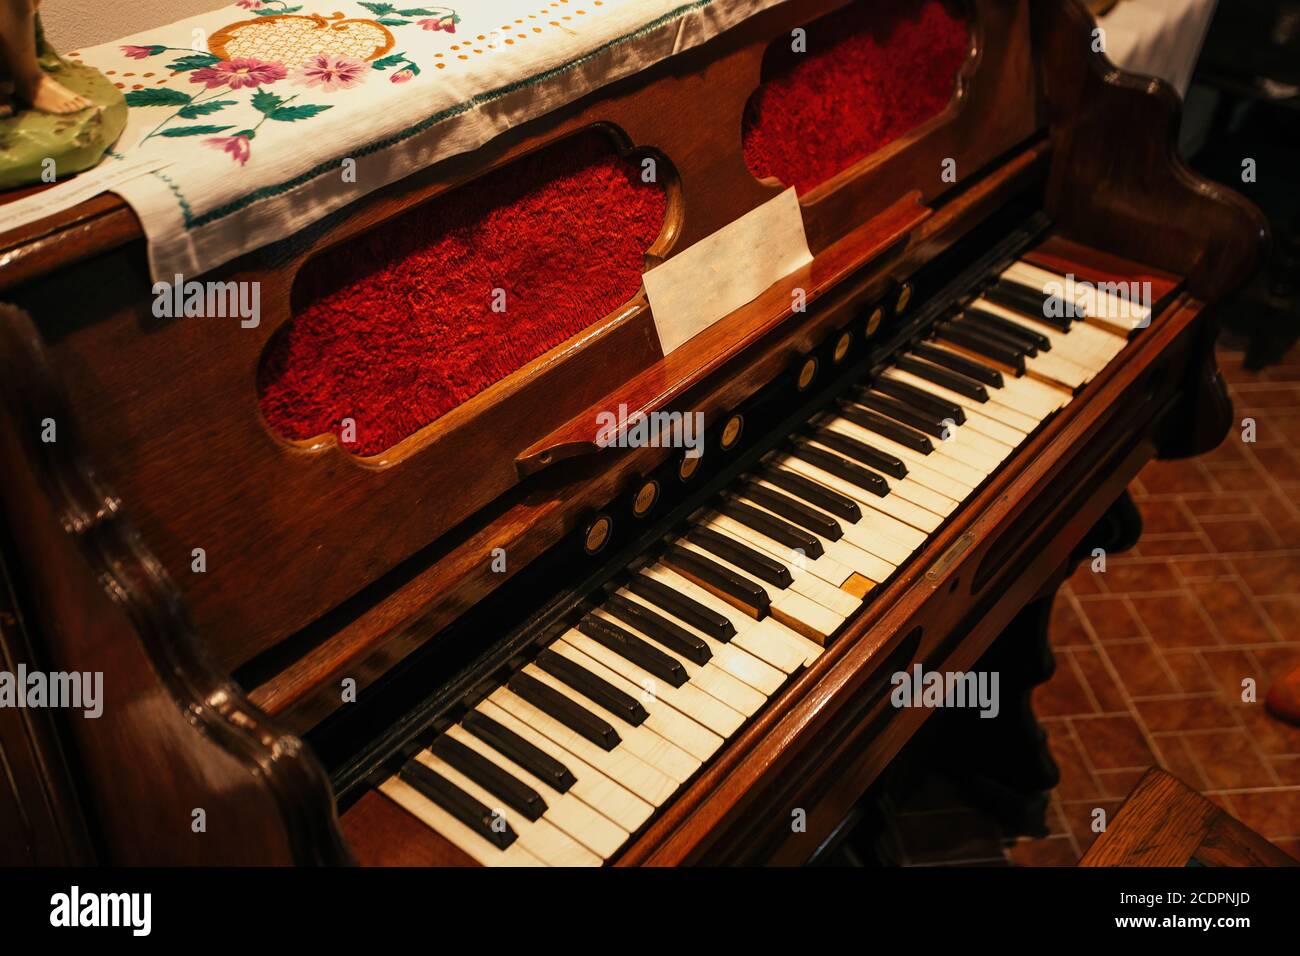 Old vintage harmonium piano keyboard. Close up view Stock Photo